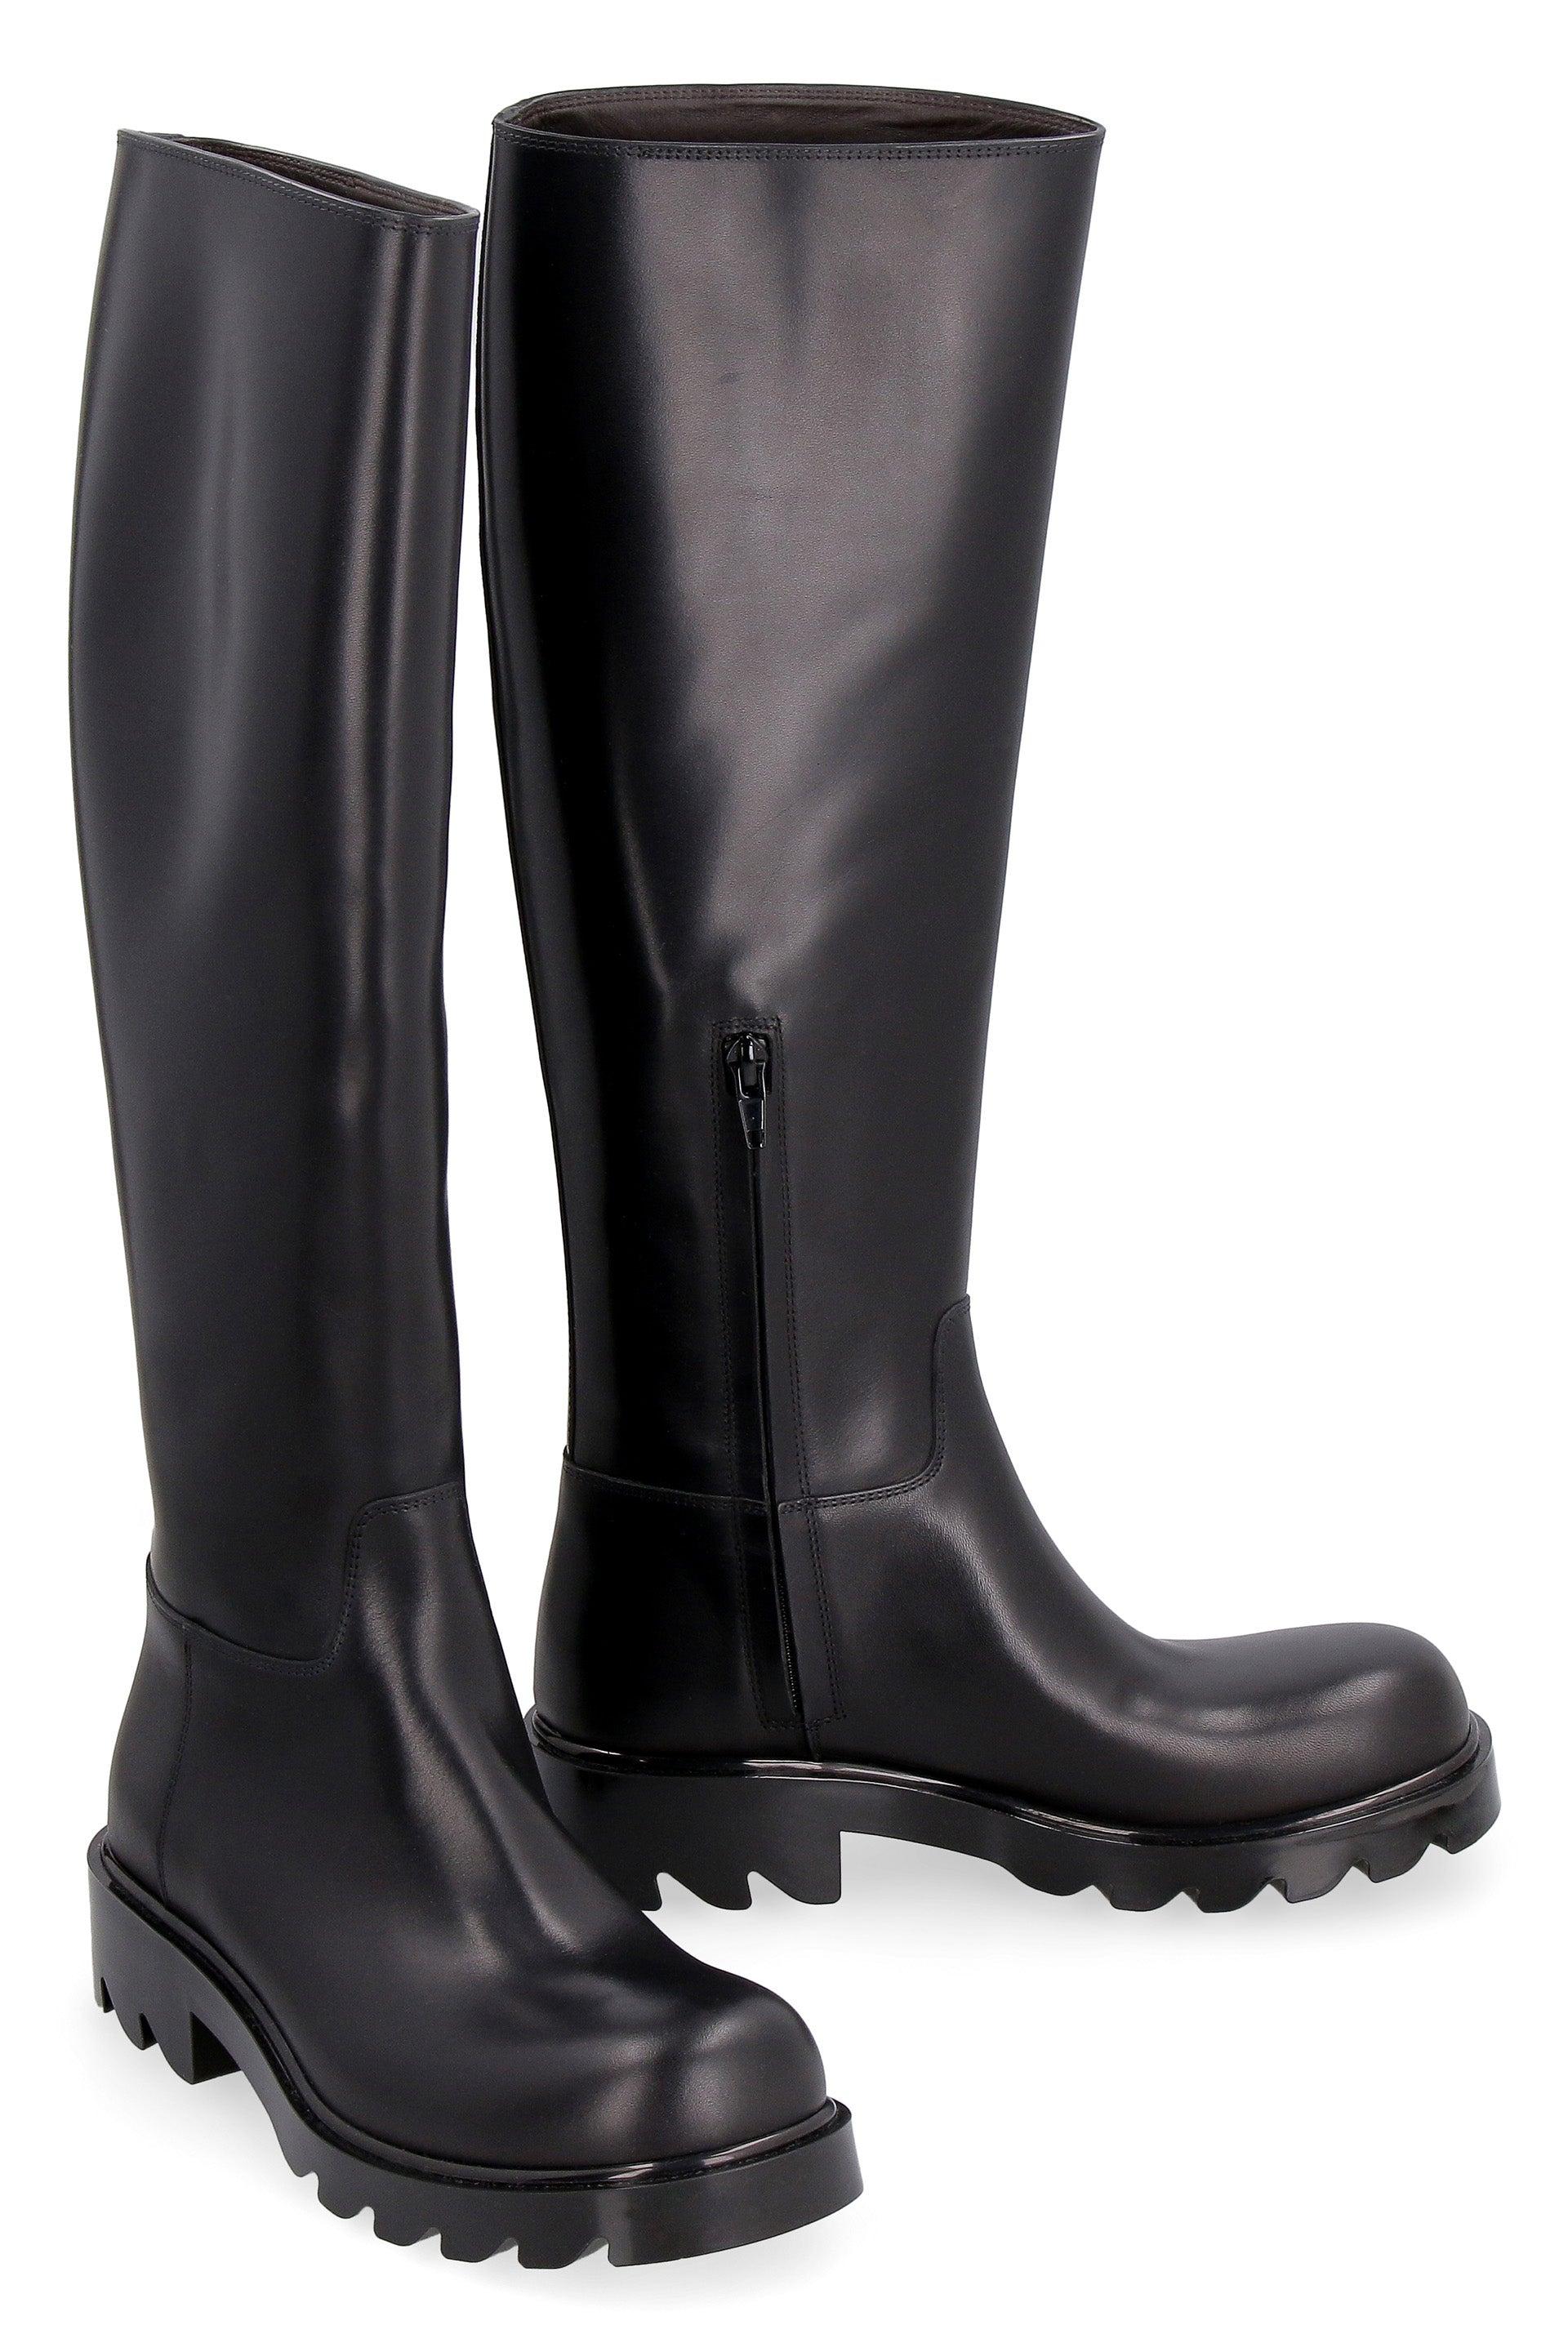 Bottega Veneta Leather Strut Knee-high Boots in Black - Save 28 